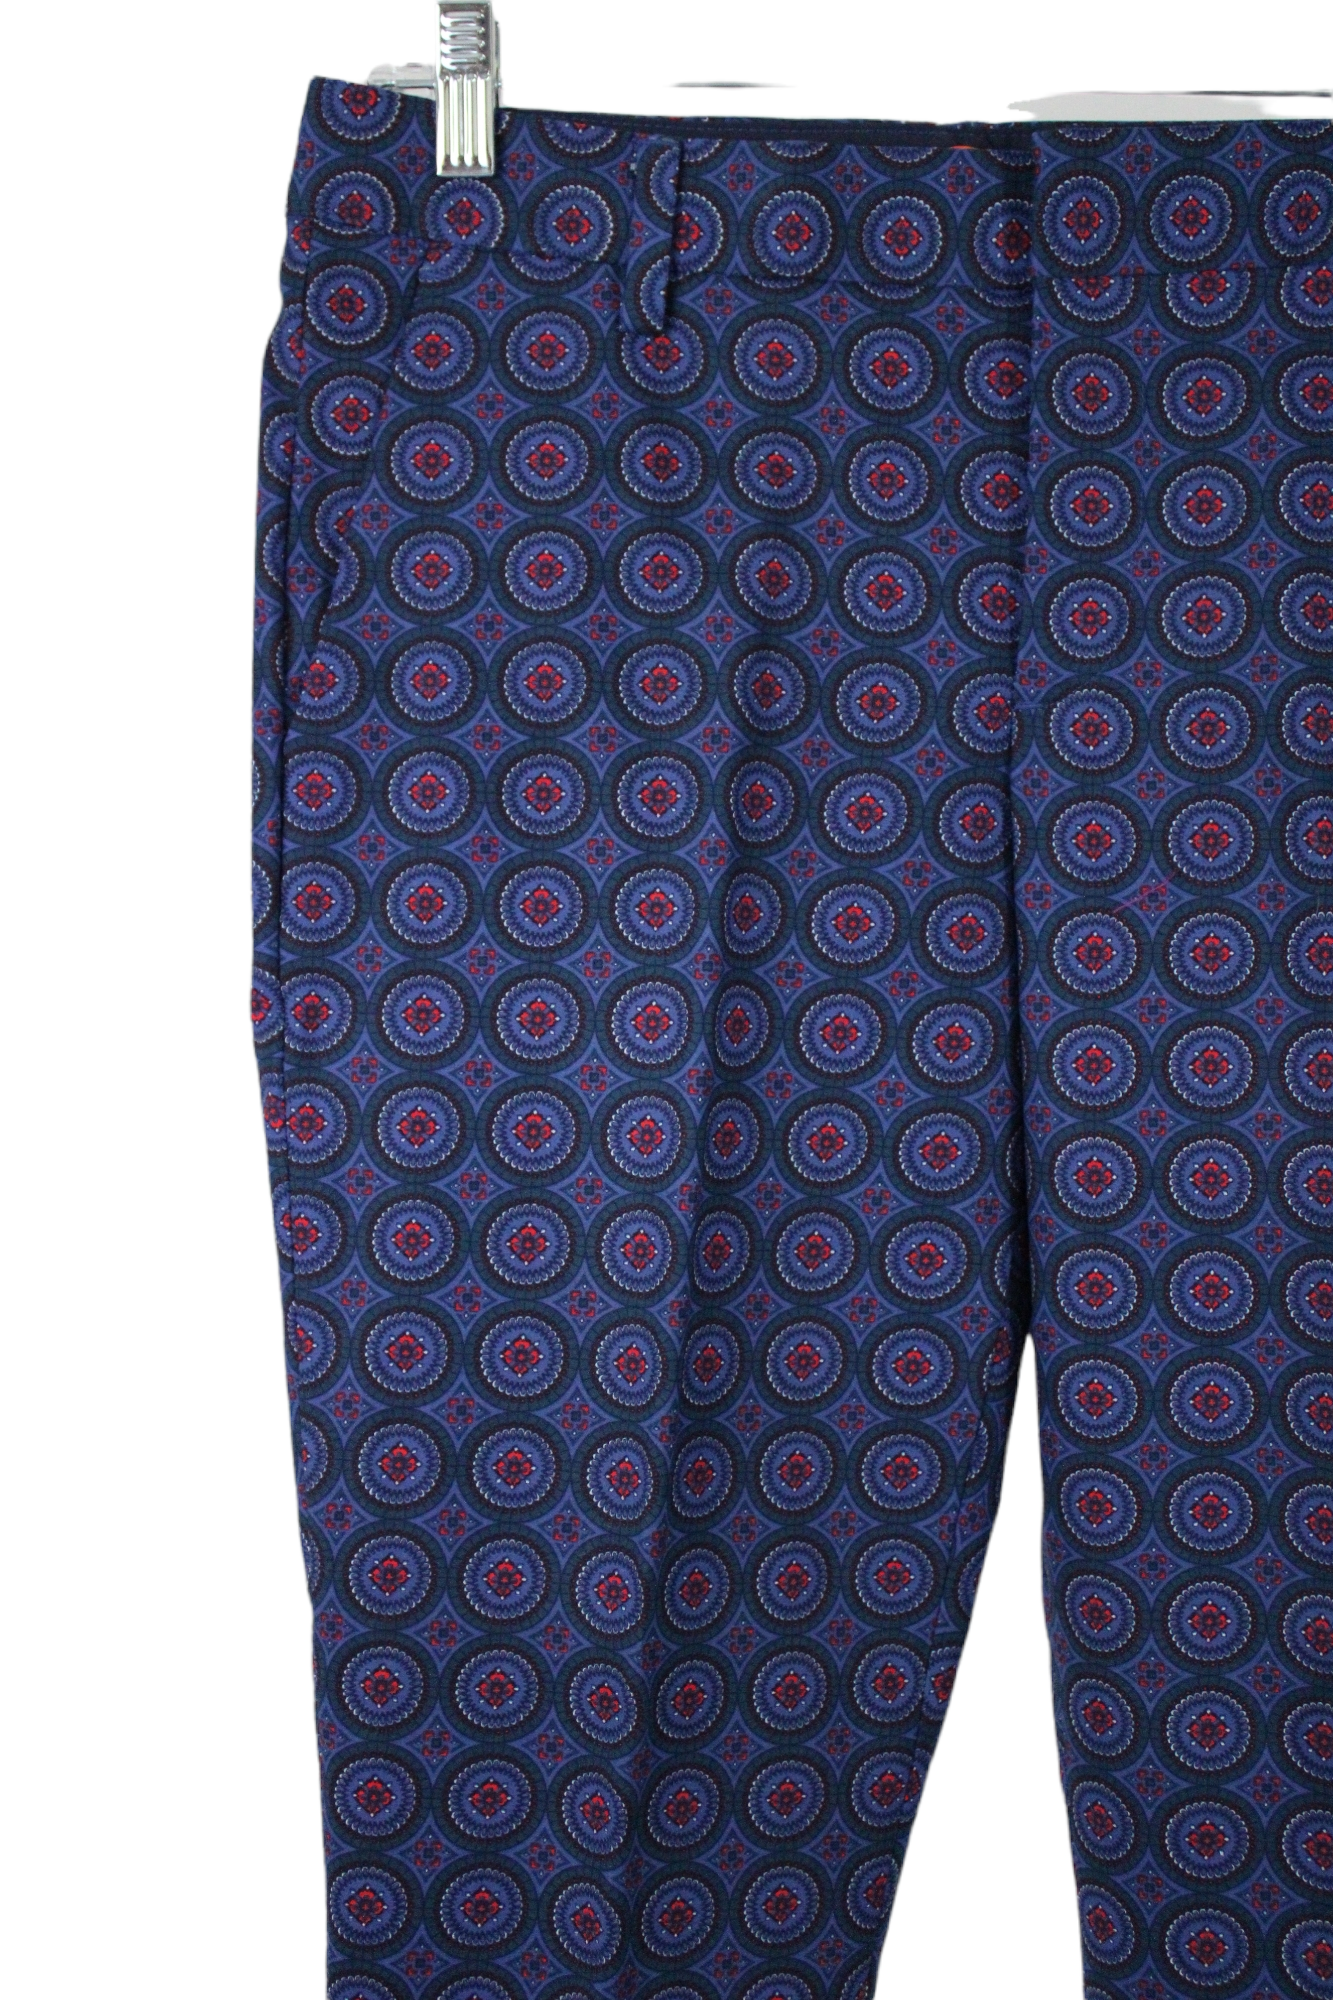 NEW Joe Fresh Slim Fit Blue Patterned Pant | 4